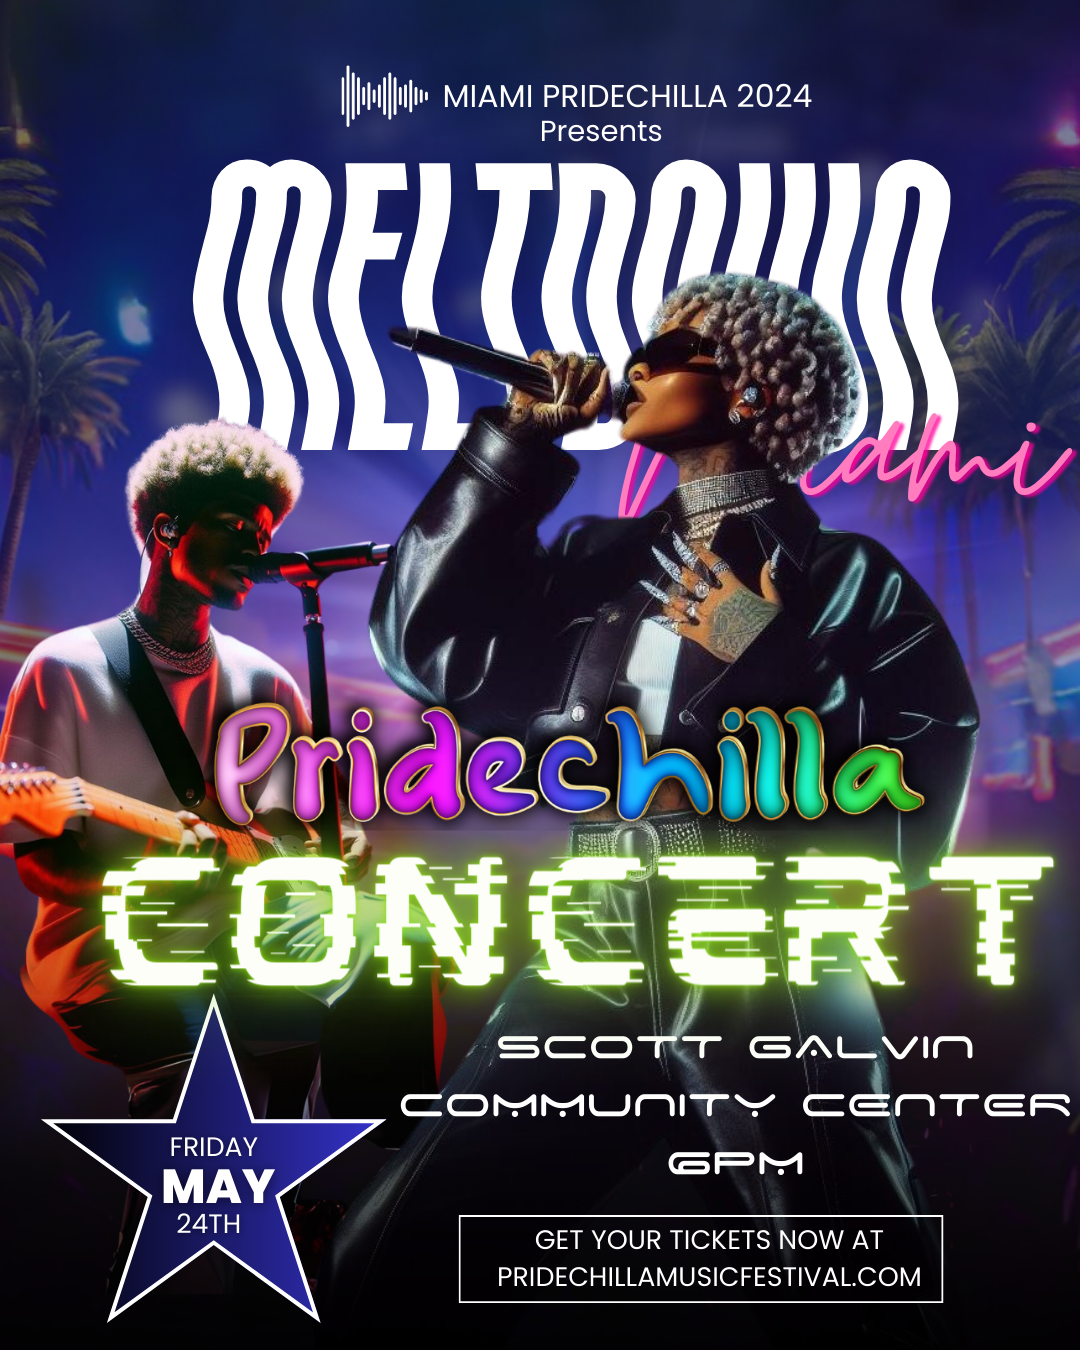 Meltdown Miami Pridechilla Concert  on May 24, 18:00@Scott Galvin Community Center - Buy tickets and Get information on Afro Pride Federation pridechillamusicfestival